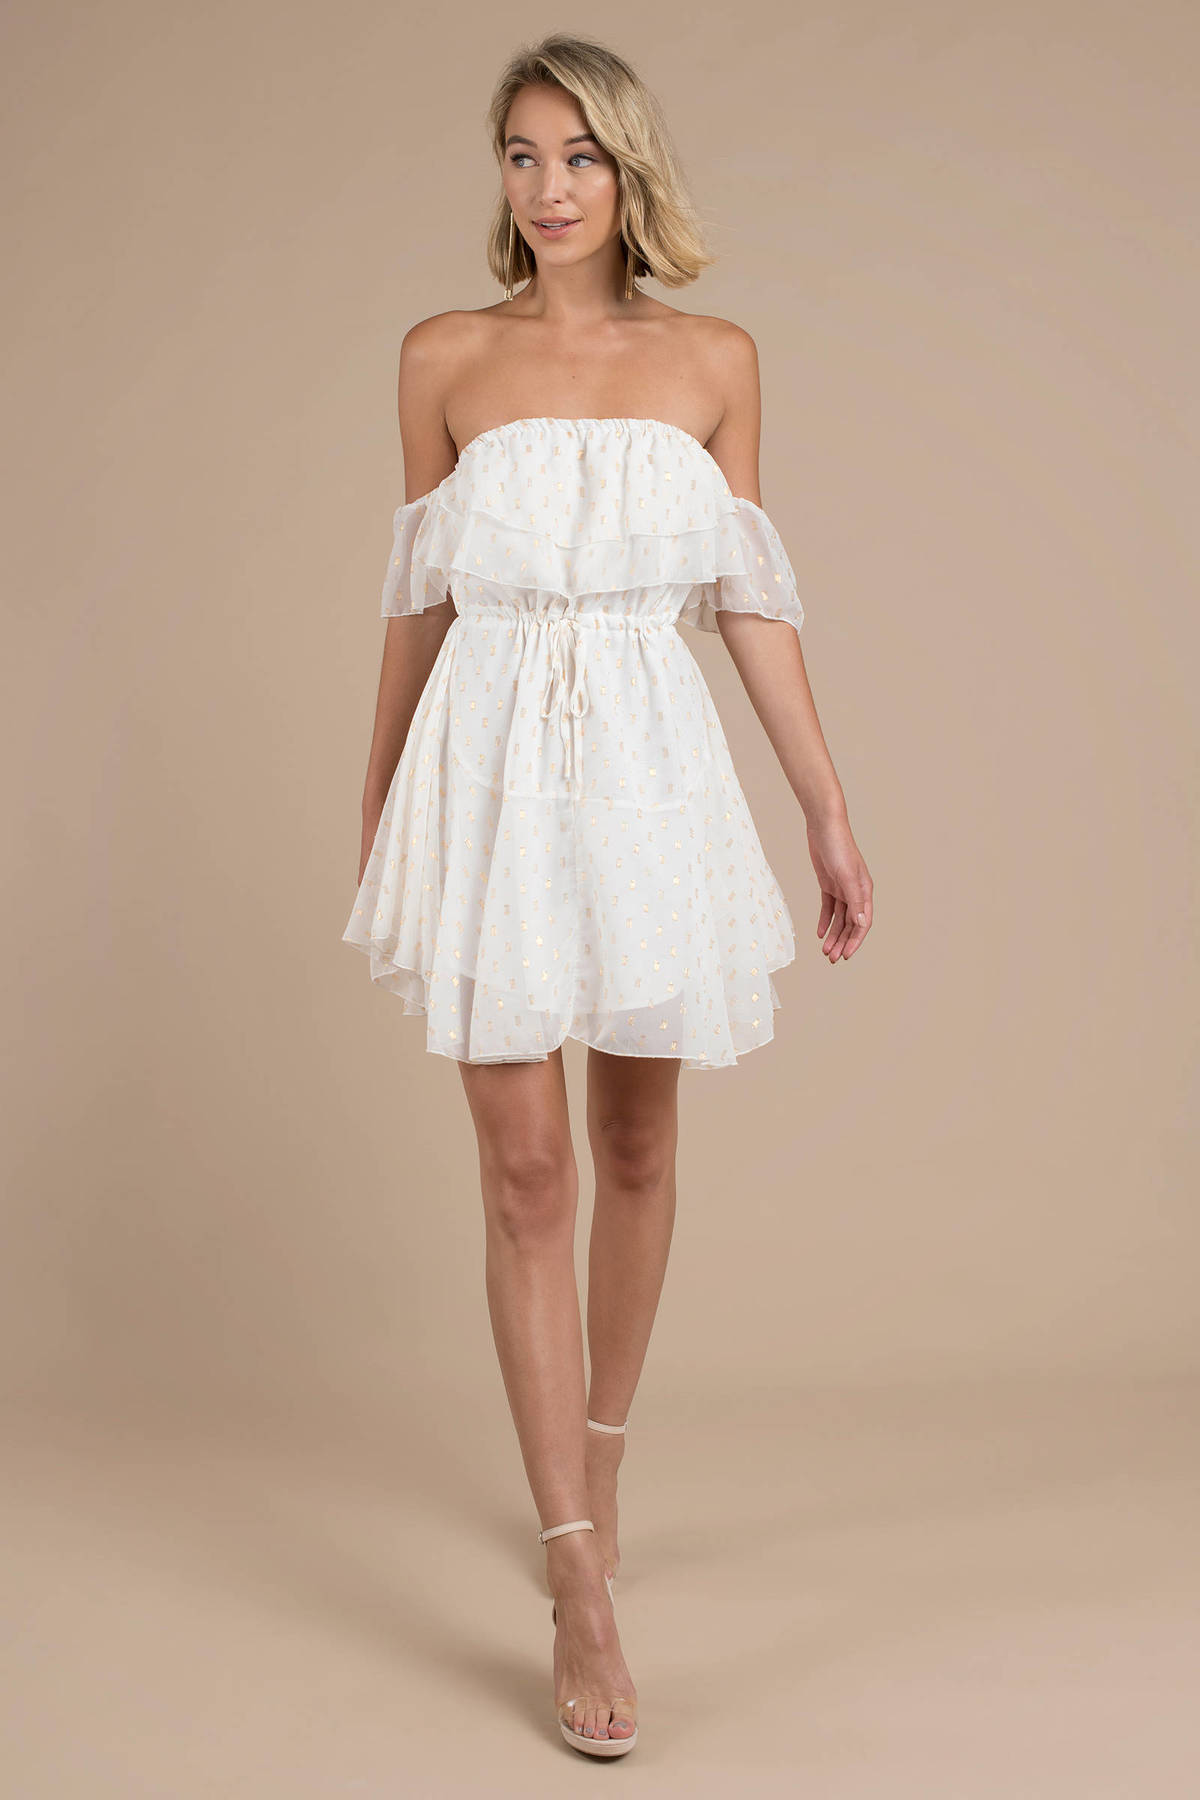 Zahara Off Shoulder Dress in White - $69 | Tobi US